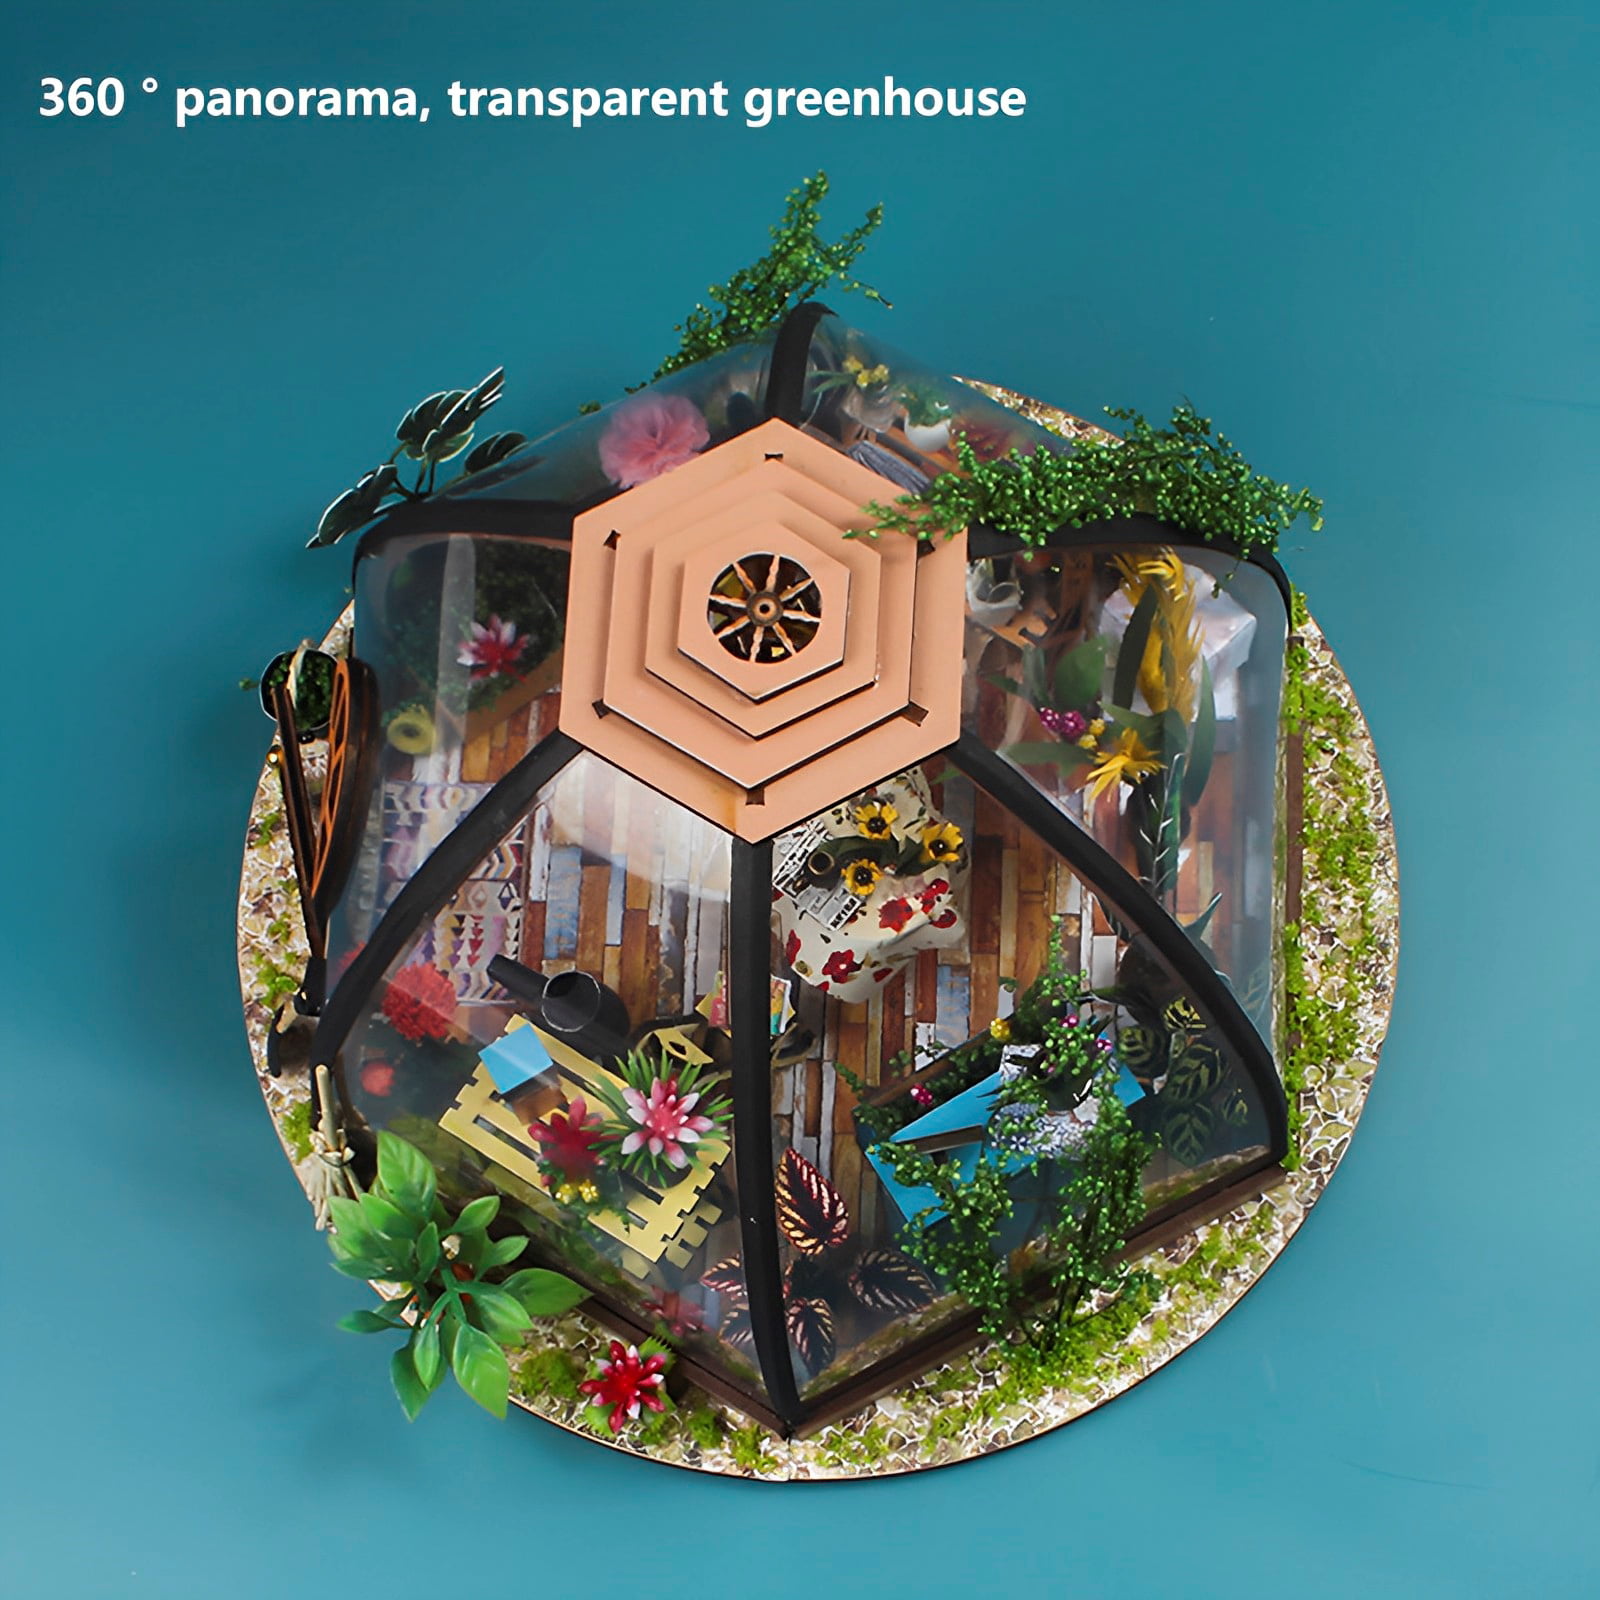 JTWEEN DIY Miniature House Kit,Tiny House kit with Furniture